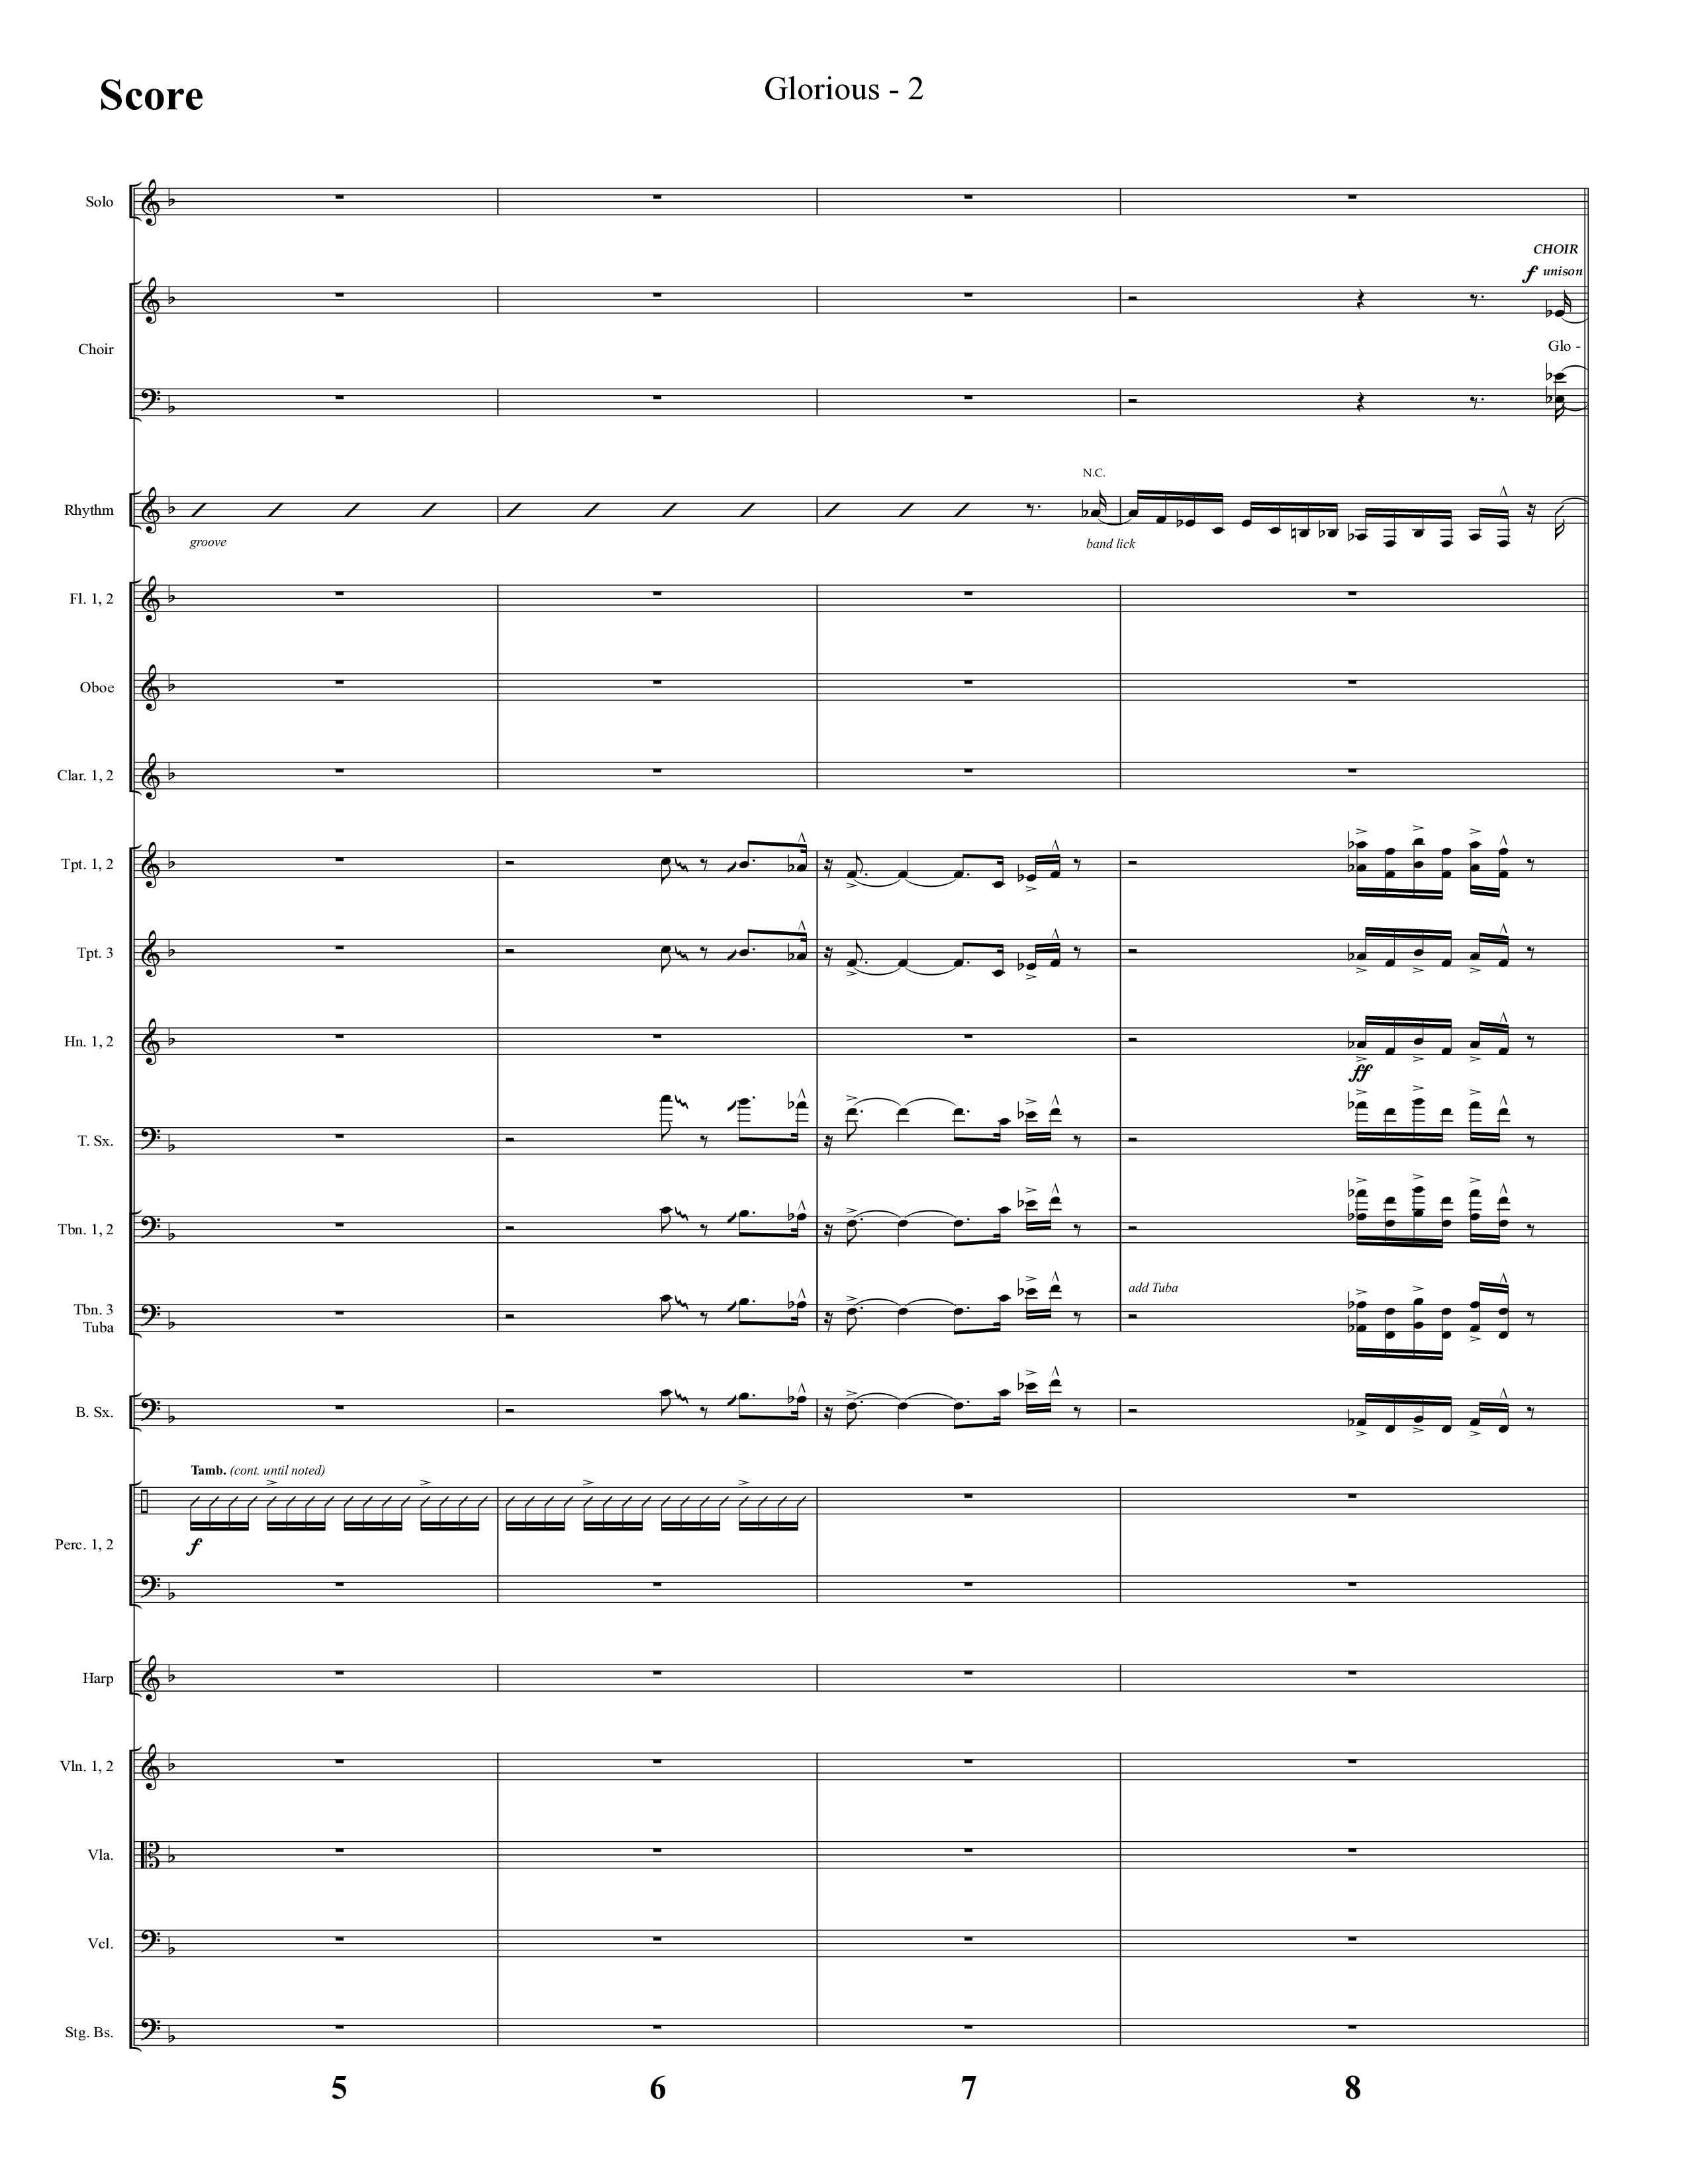 Glorious (Choral Anthem SATB) Orchestration (Lifeway Choral / Arr. Cliff Duren)